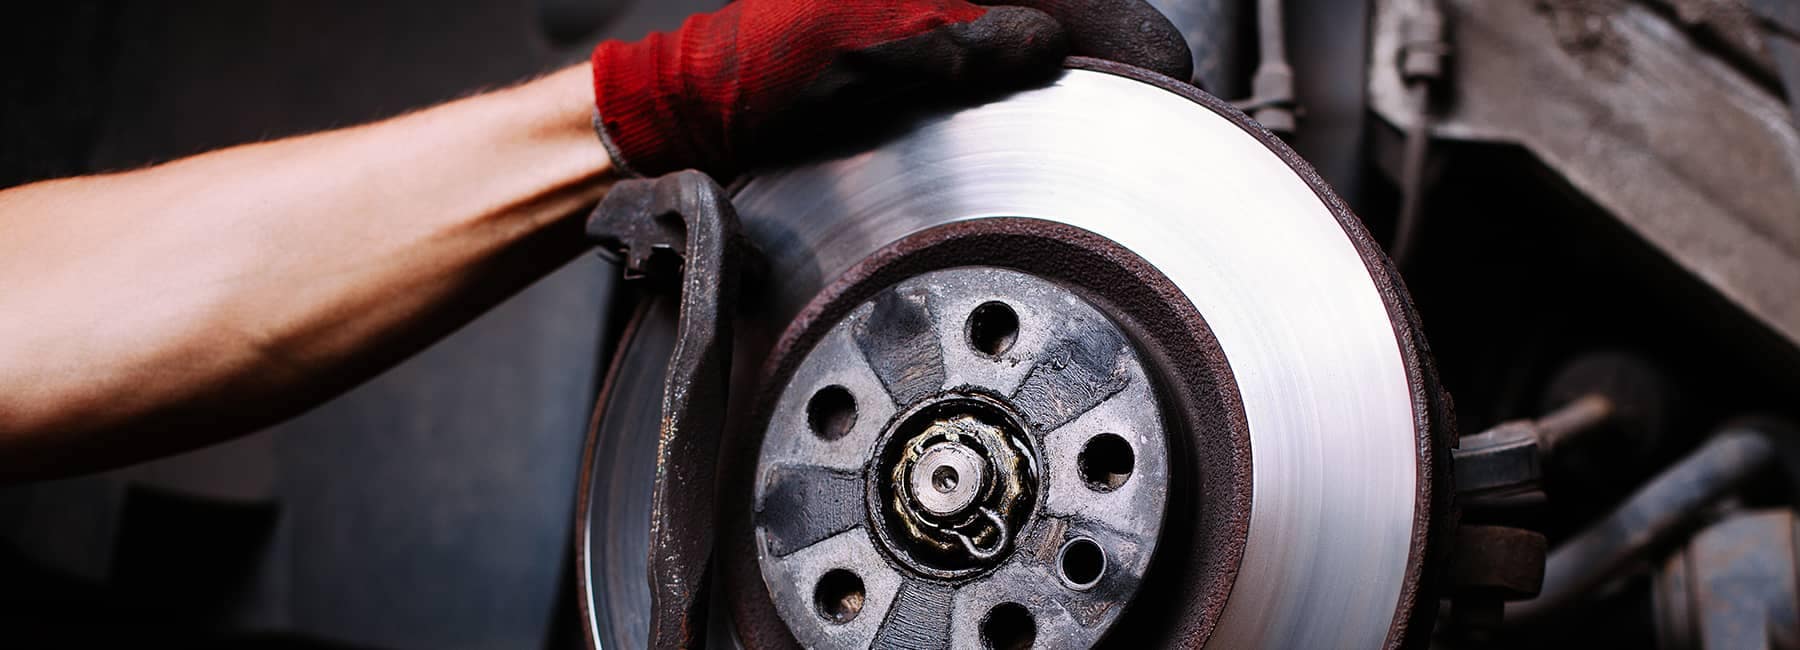 Replacing brake rotors on a vehicle